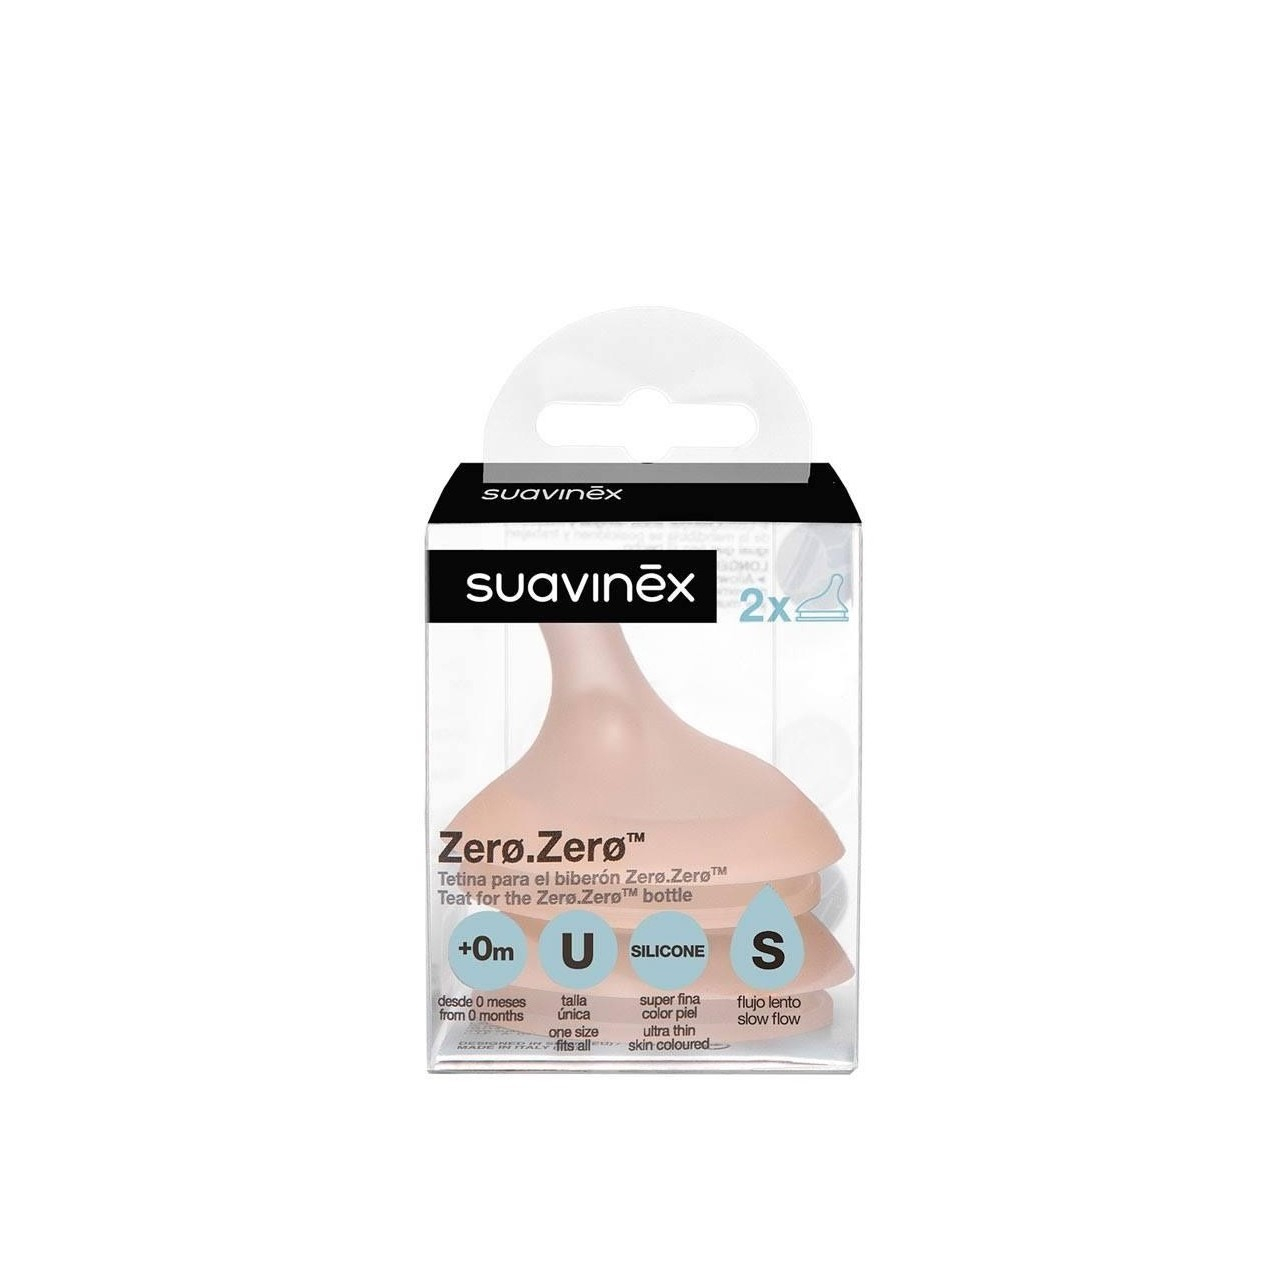 Buy Suavinex Zero Zero Anti-Colic Flow S Silicone Nipple x2 · USA